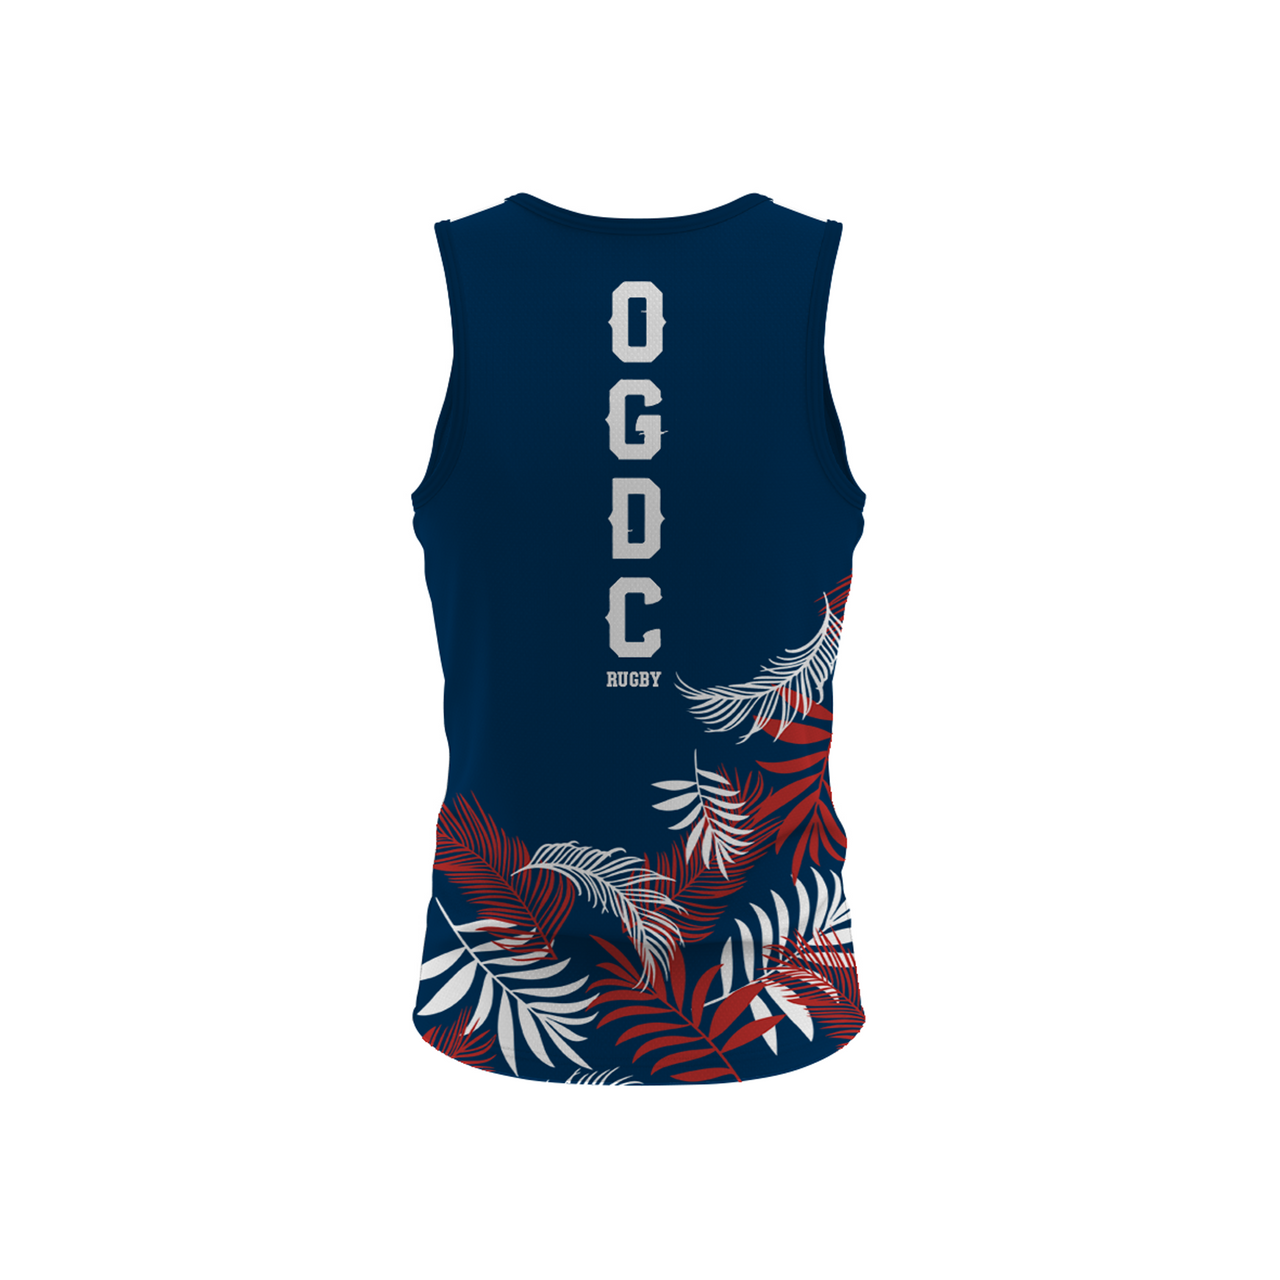 Camiseta de tirantes OGDC Island Range